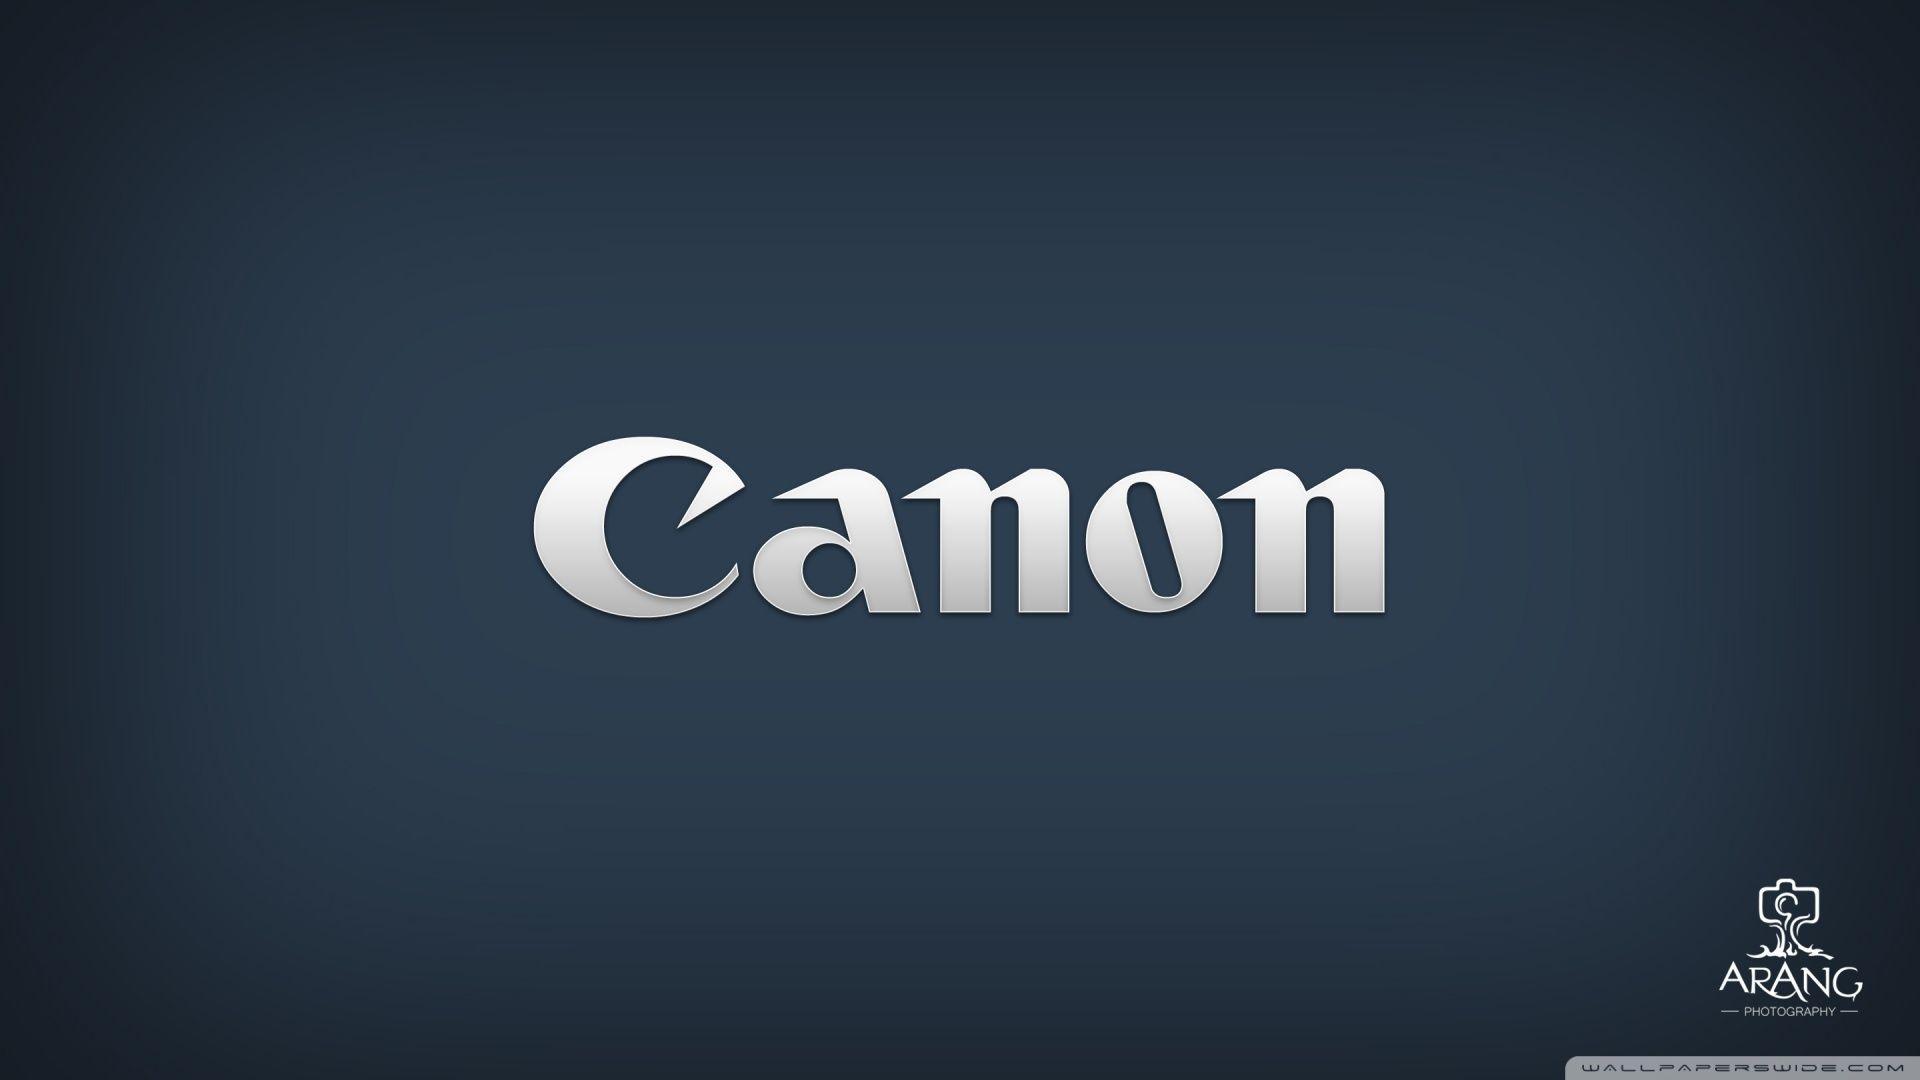 Canon Logo wallpaper HD desktop wallpaper, High Definition